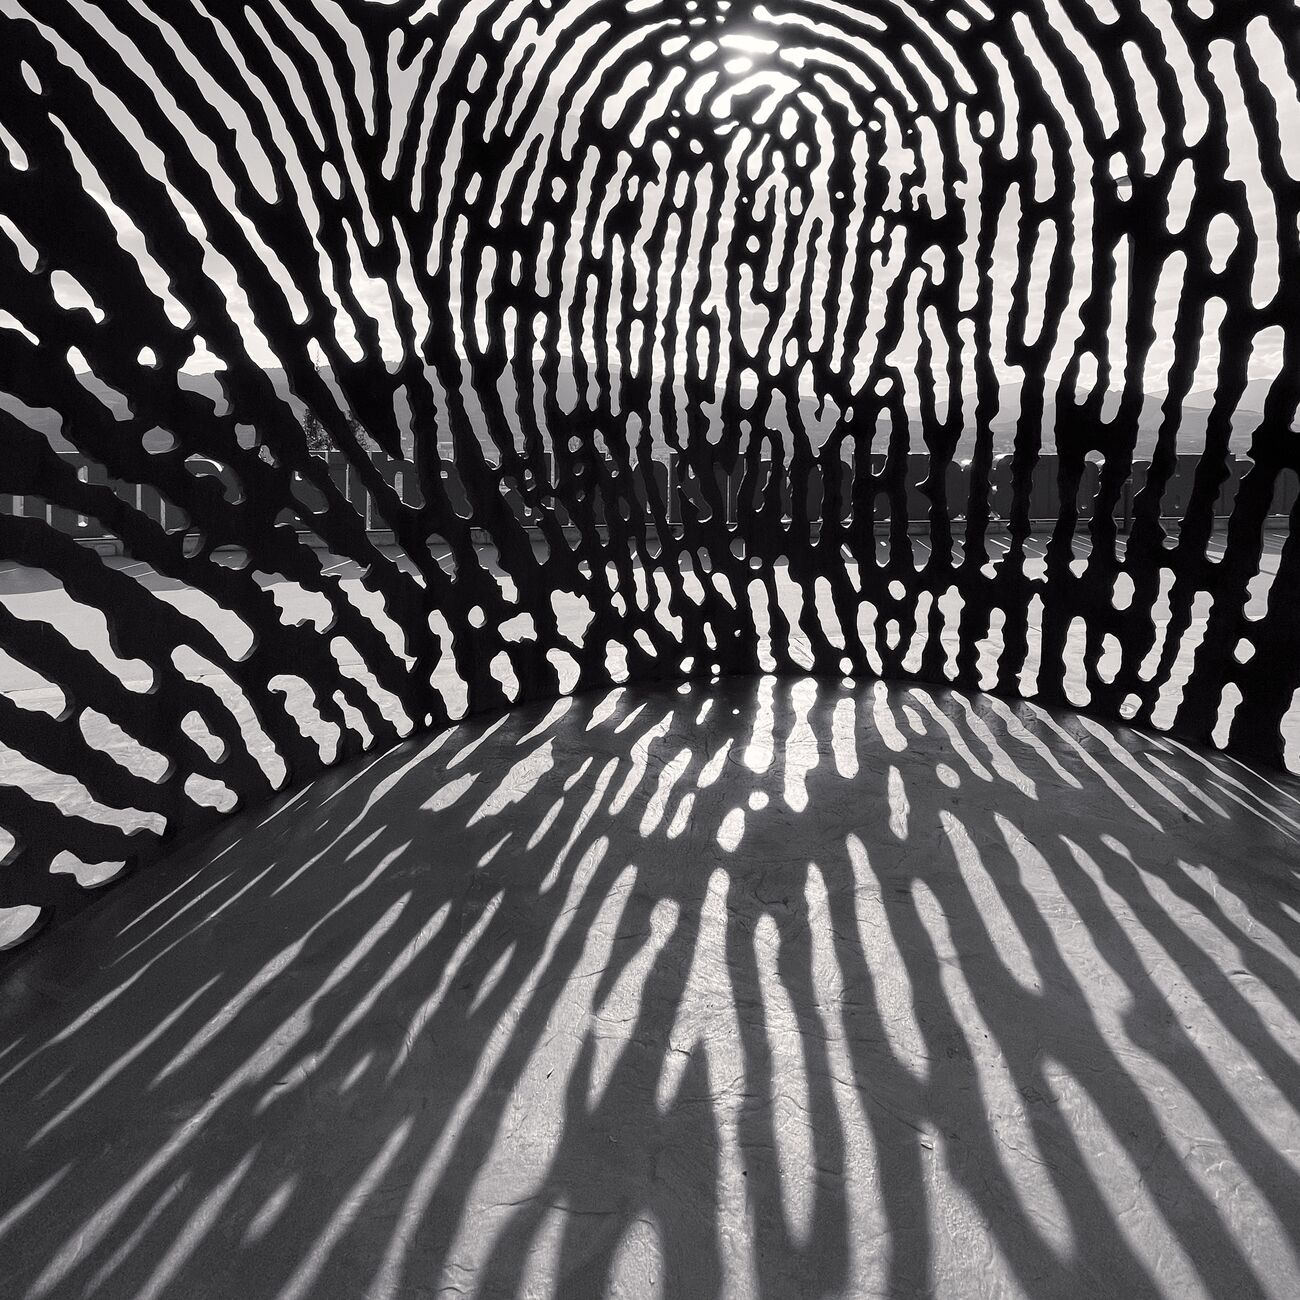 Aterpe Fingerprint Sculpture, Bilbao, Espagne. Février 2022. Ref-11591 - Denis Olivier Photographie